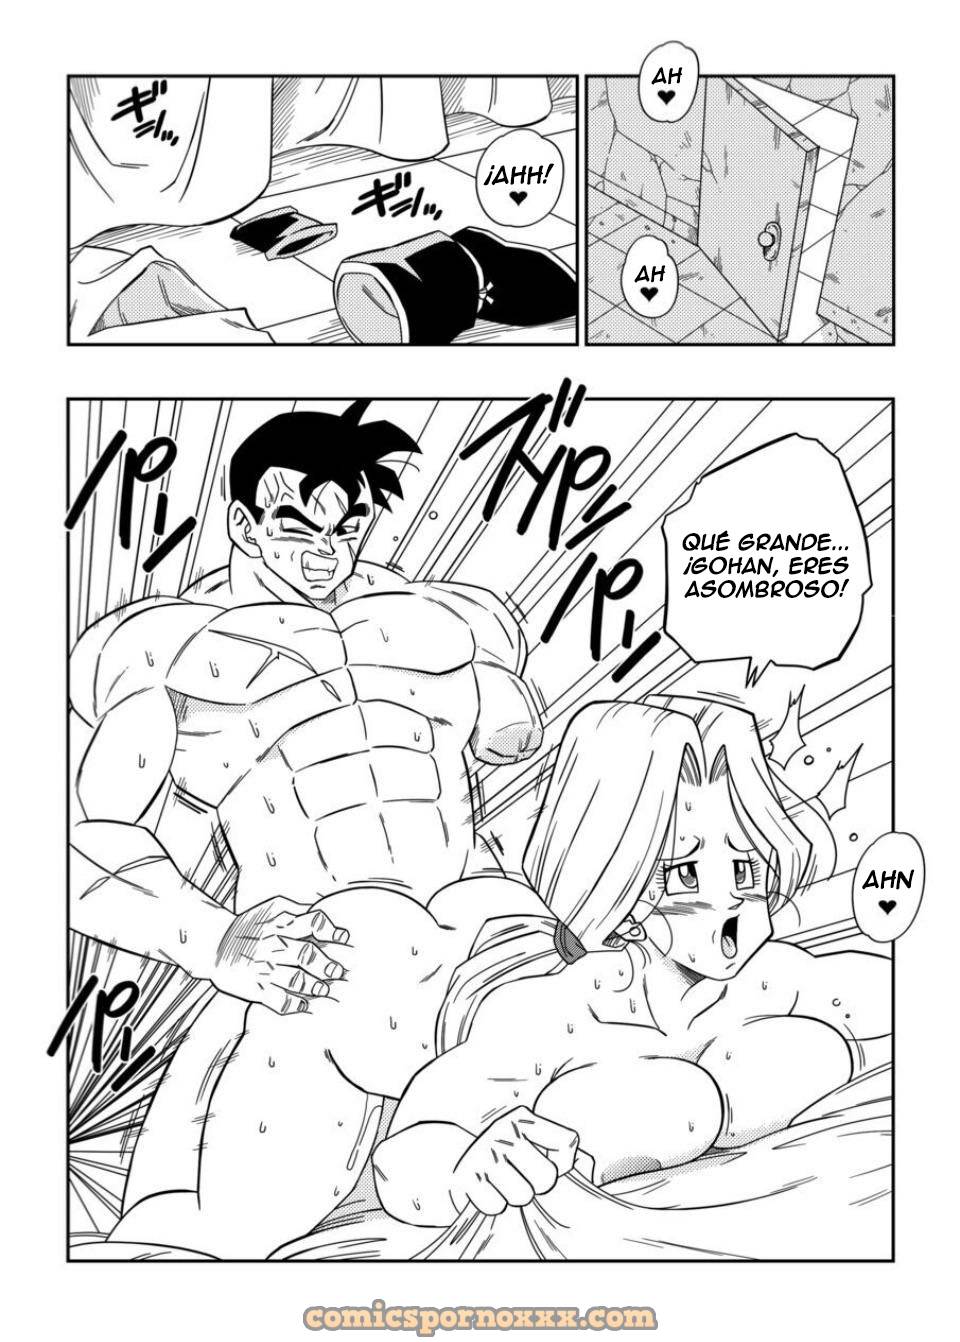 Lots of Sex in this Future - 5 - Comics Porno - Hentai Manga - Cartoon XXX